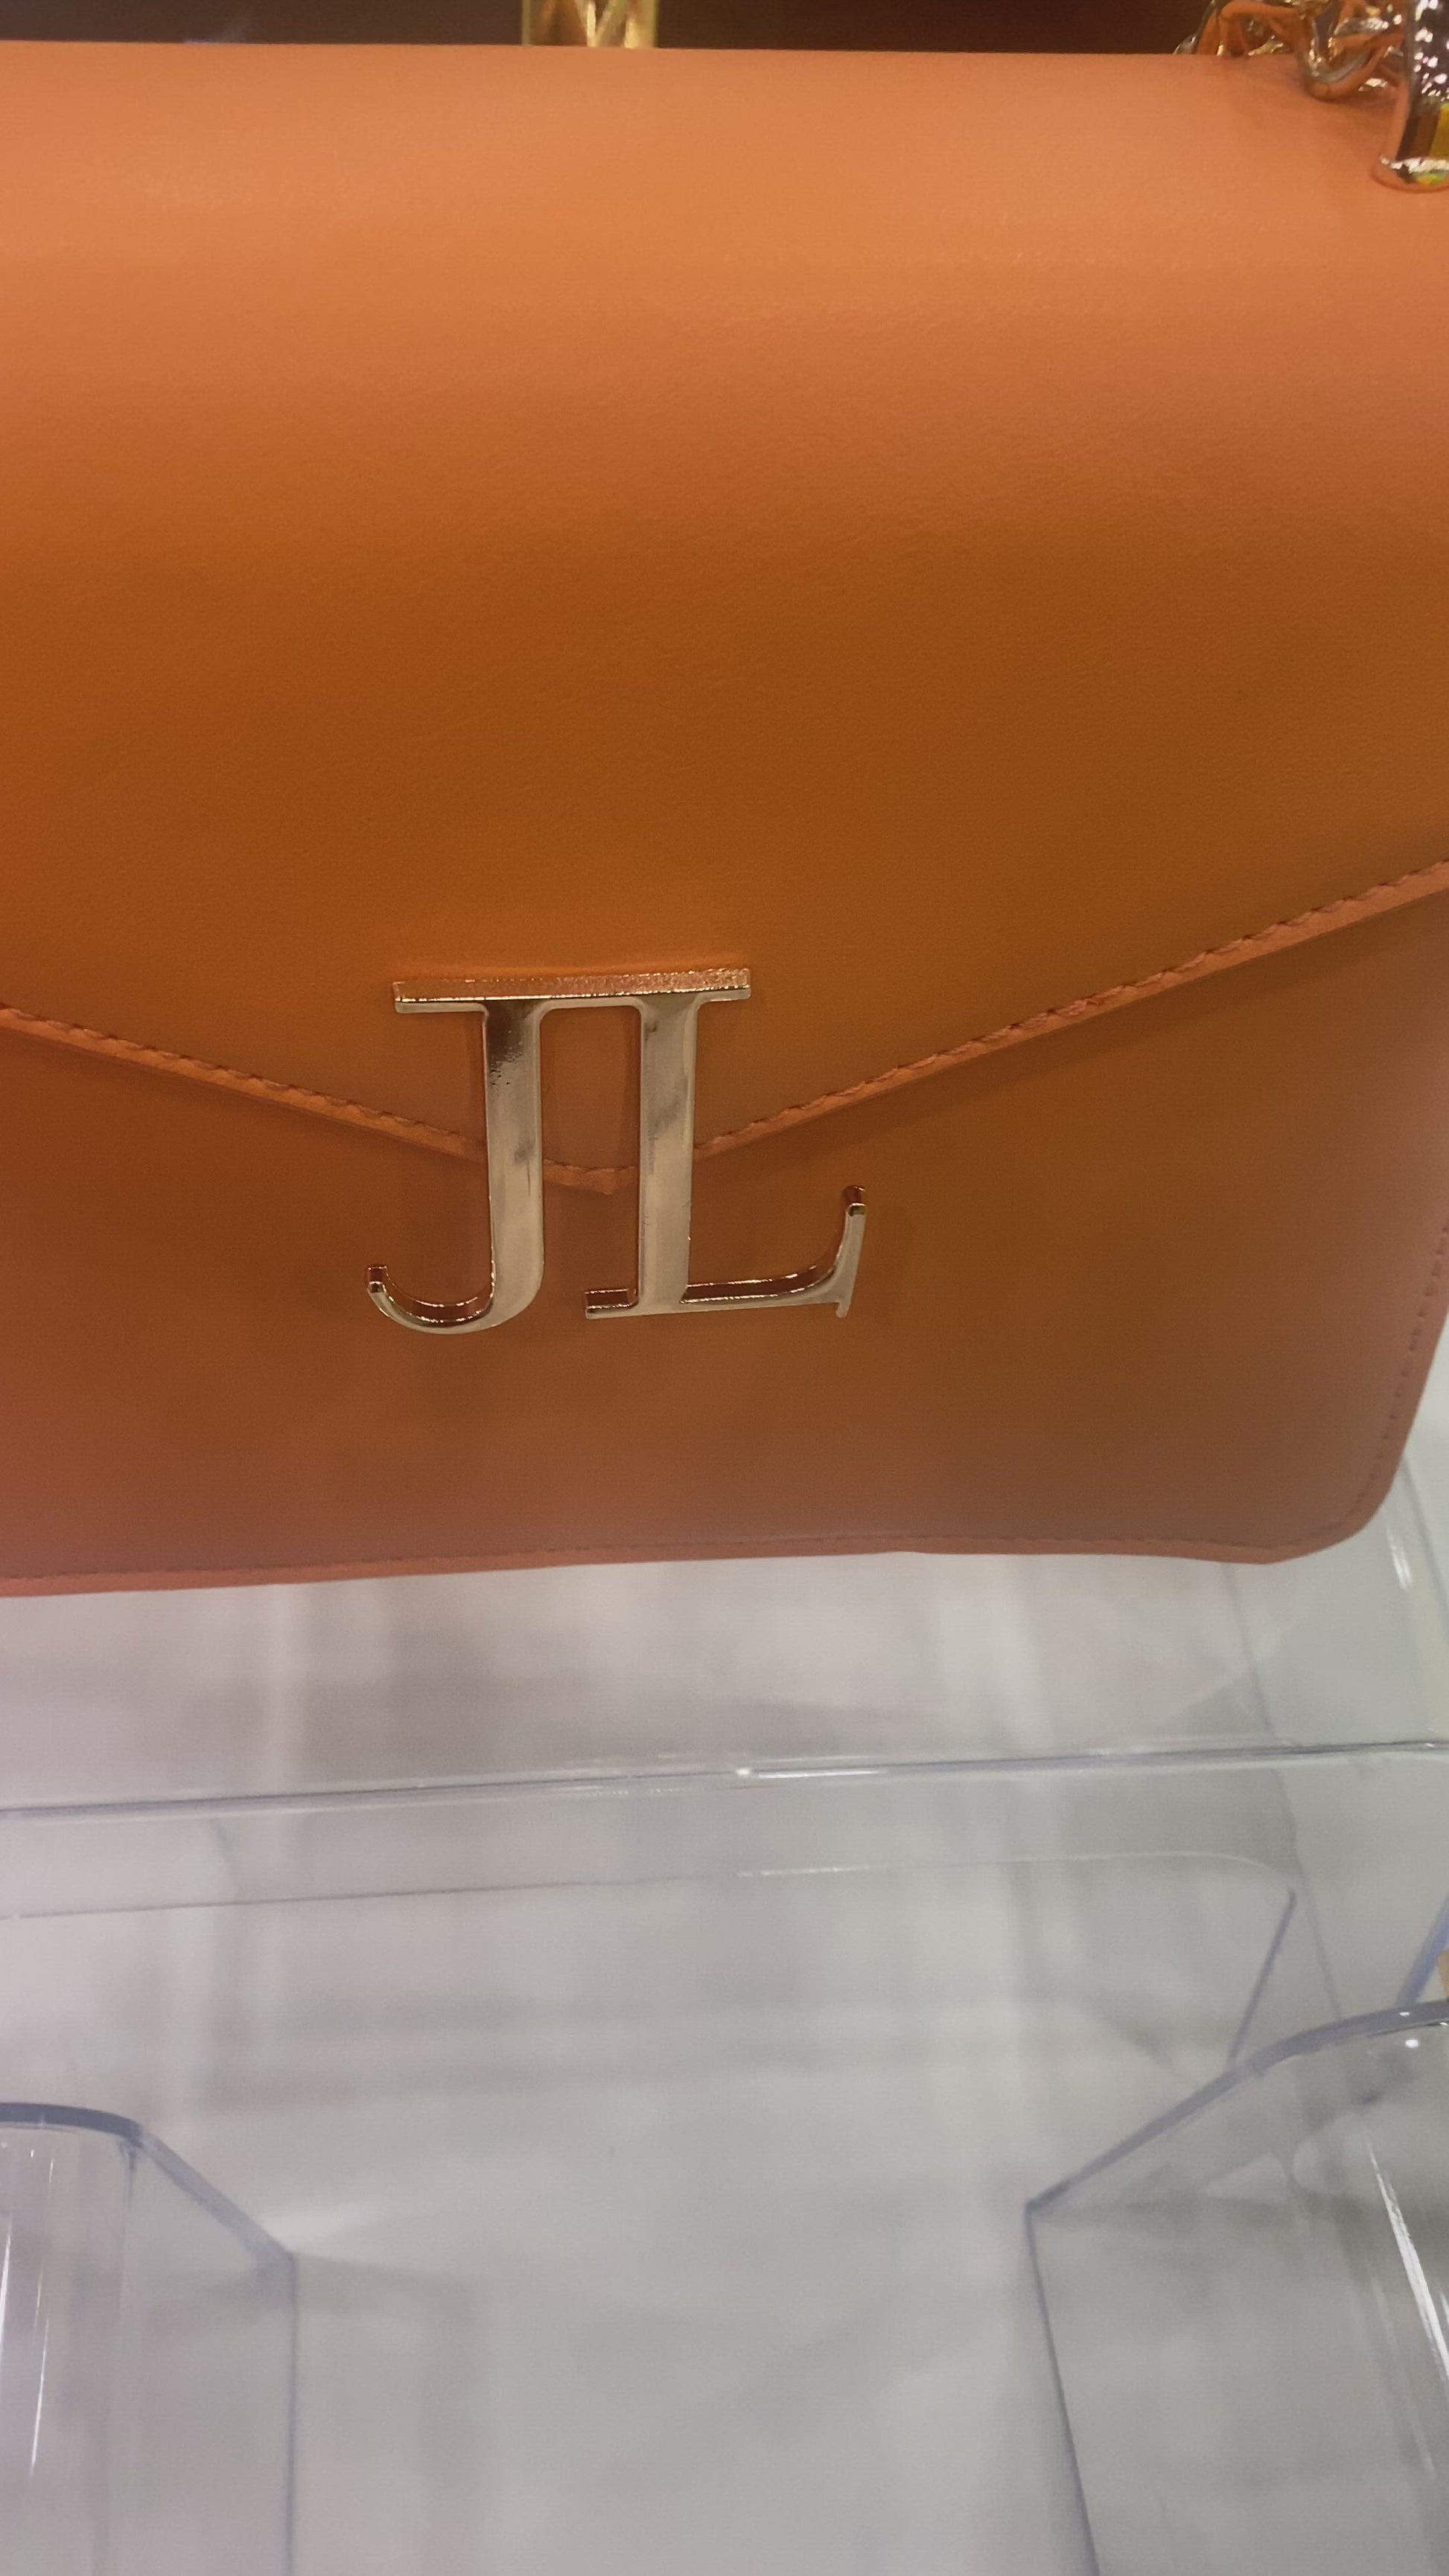 Lot of 4 Vintage Retro leather pleather Yellow Purses Bags Handbags (JL-110)  | eBay